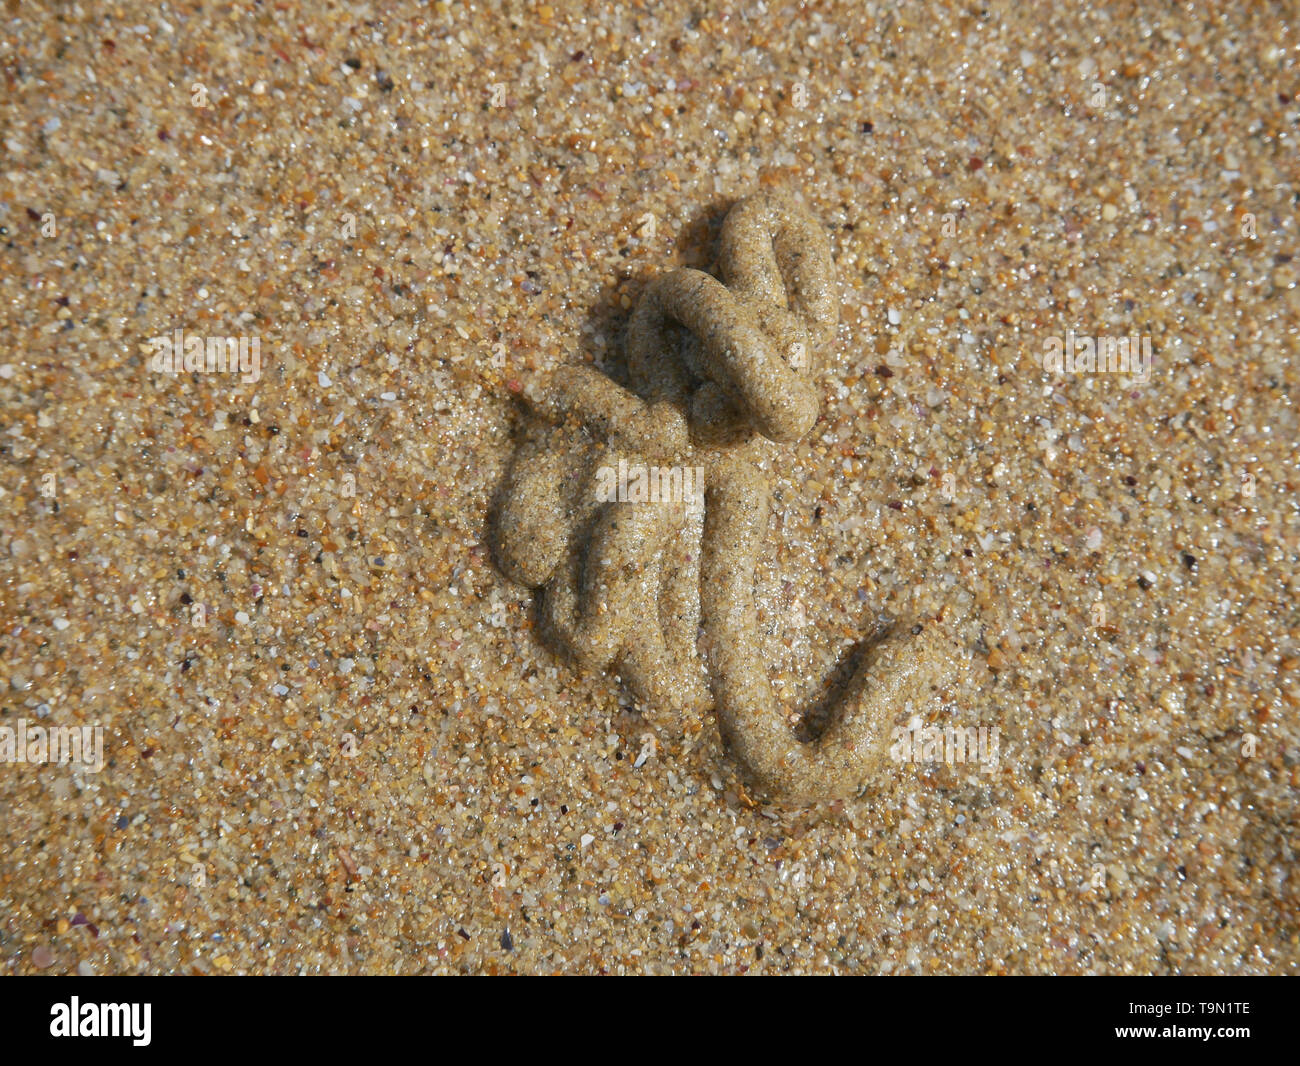 Marine worm casting or debris of sand on a sandy beach of the Gold Coast of Australia Stock Photo